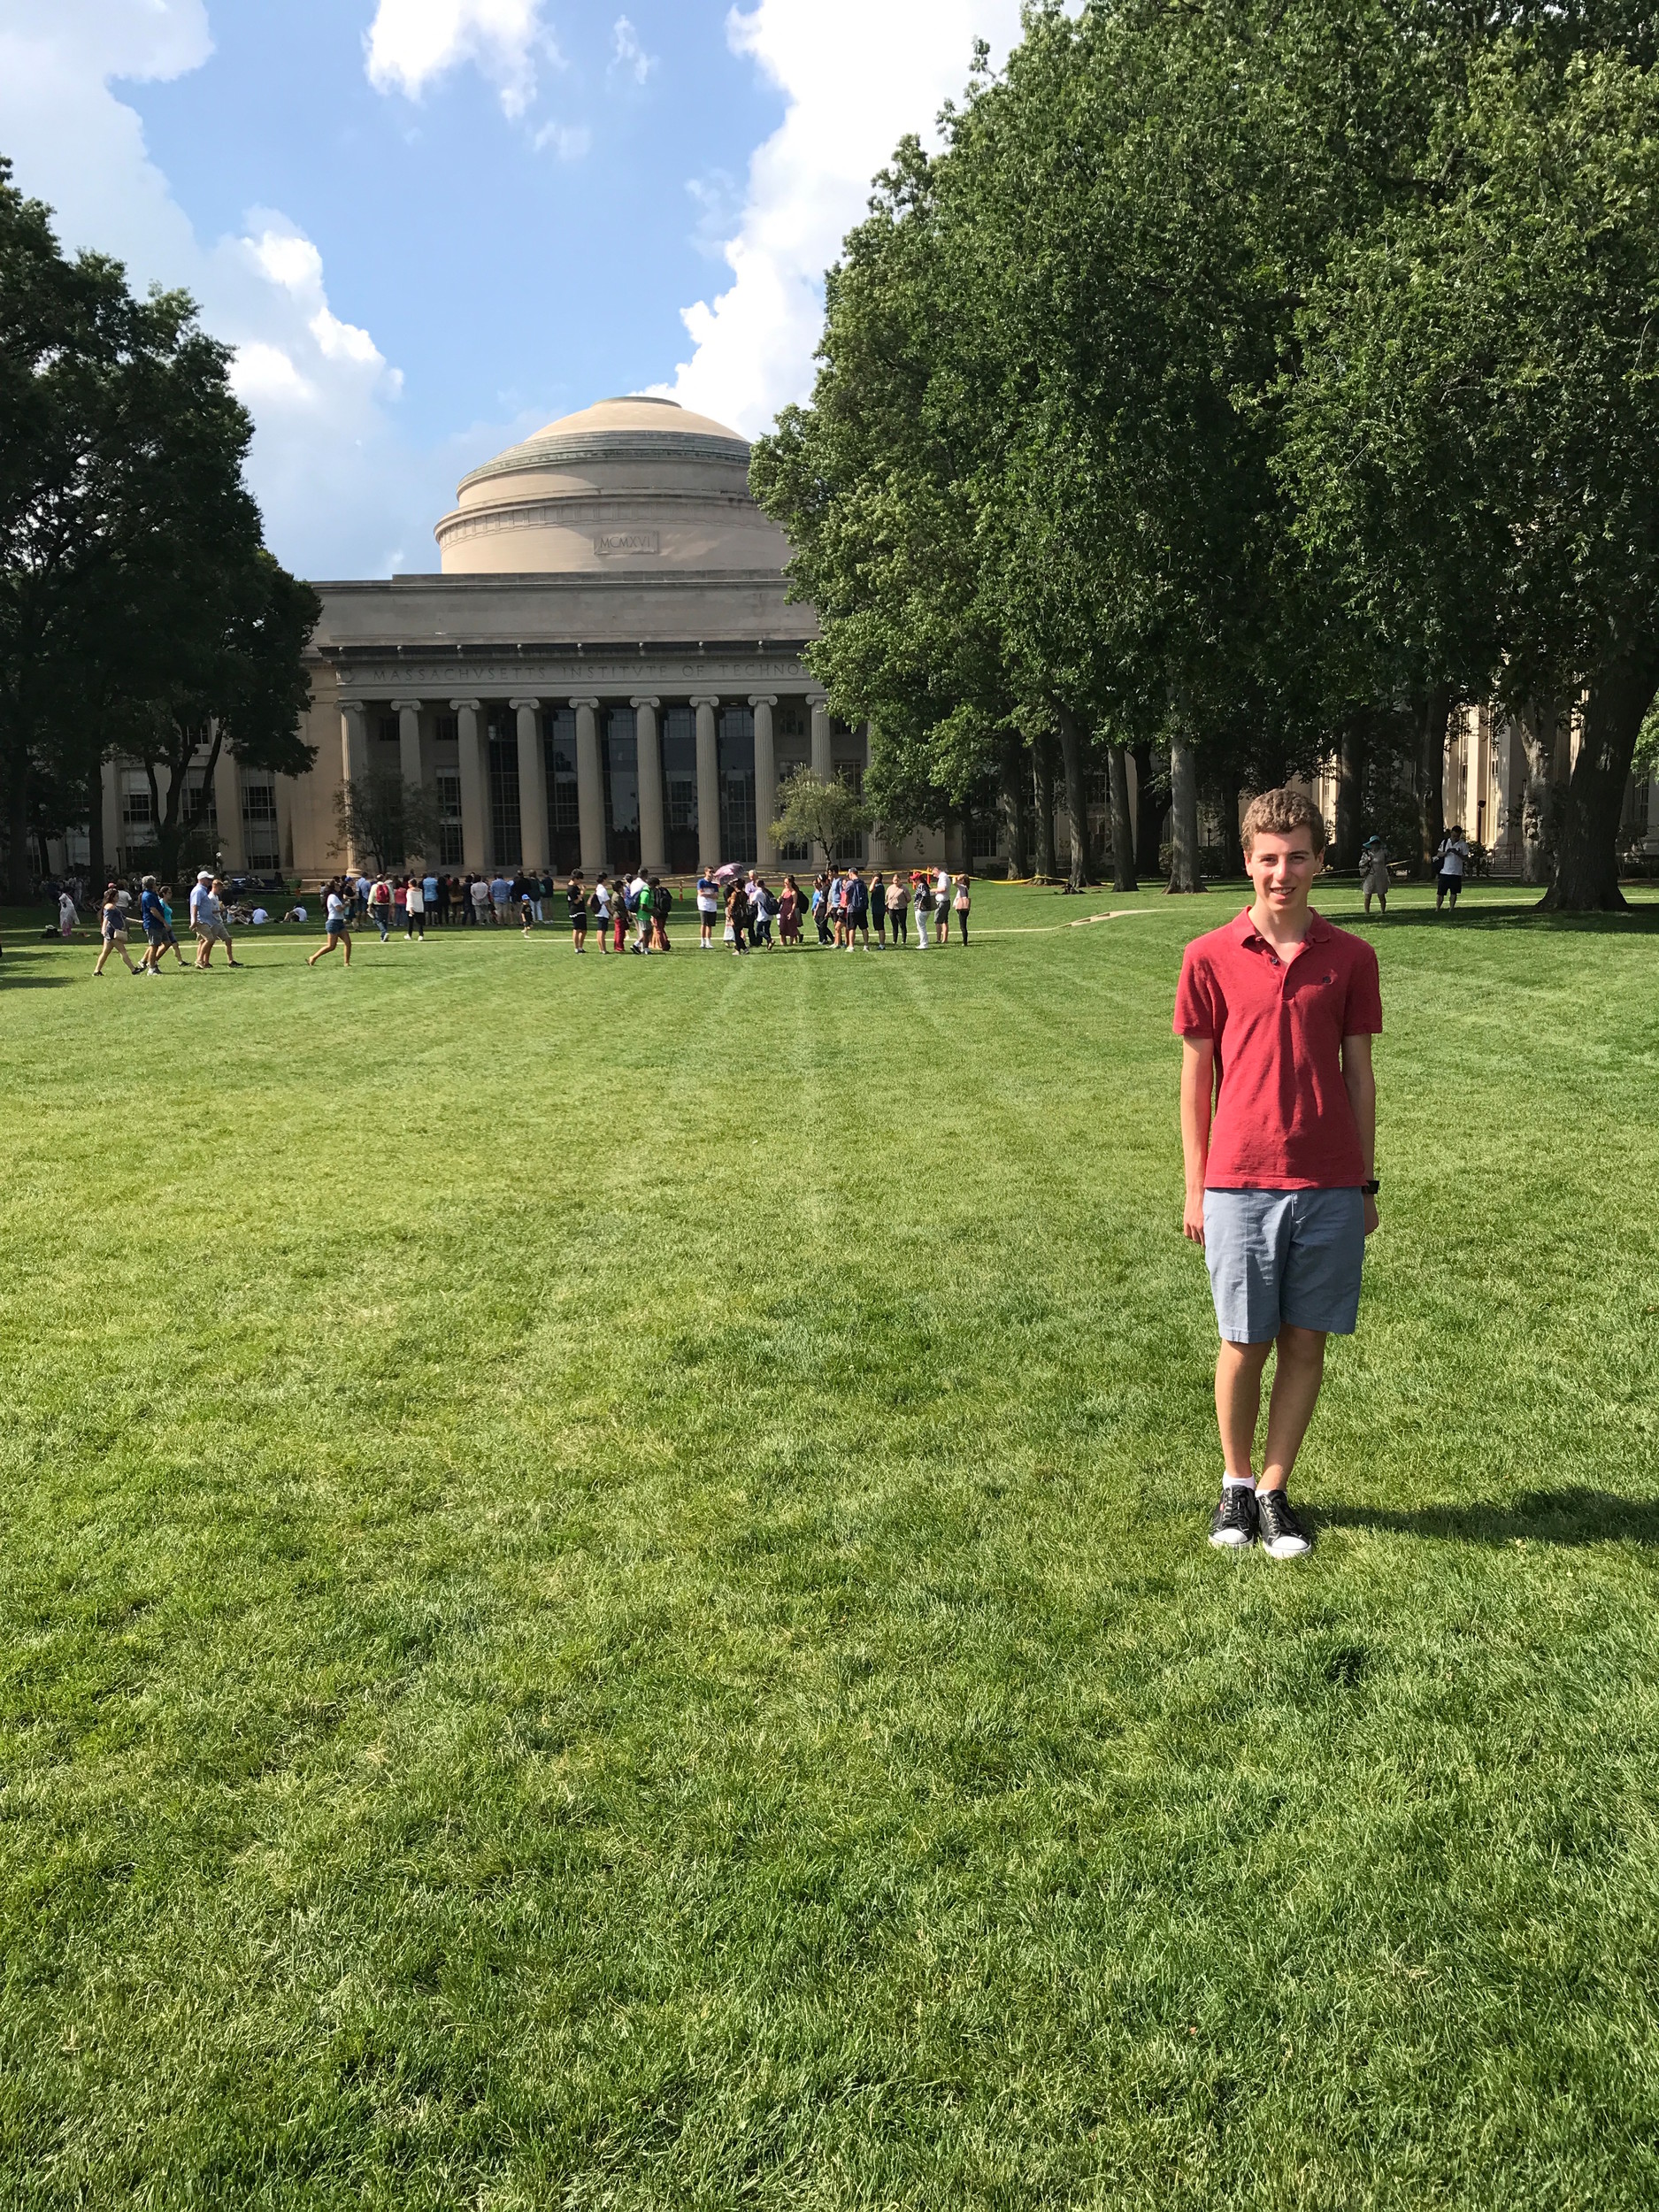 Hewlett High School rising senior Ben Rapp visited MIT on his tour of colleges this summer.